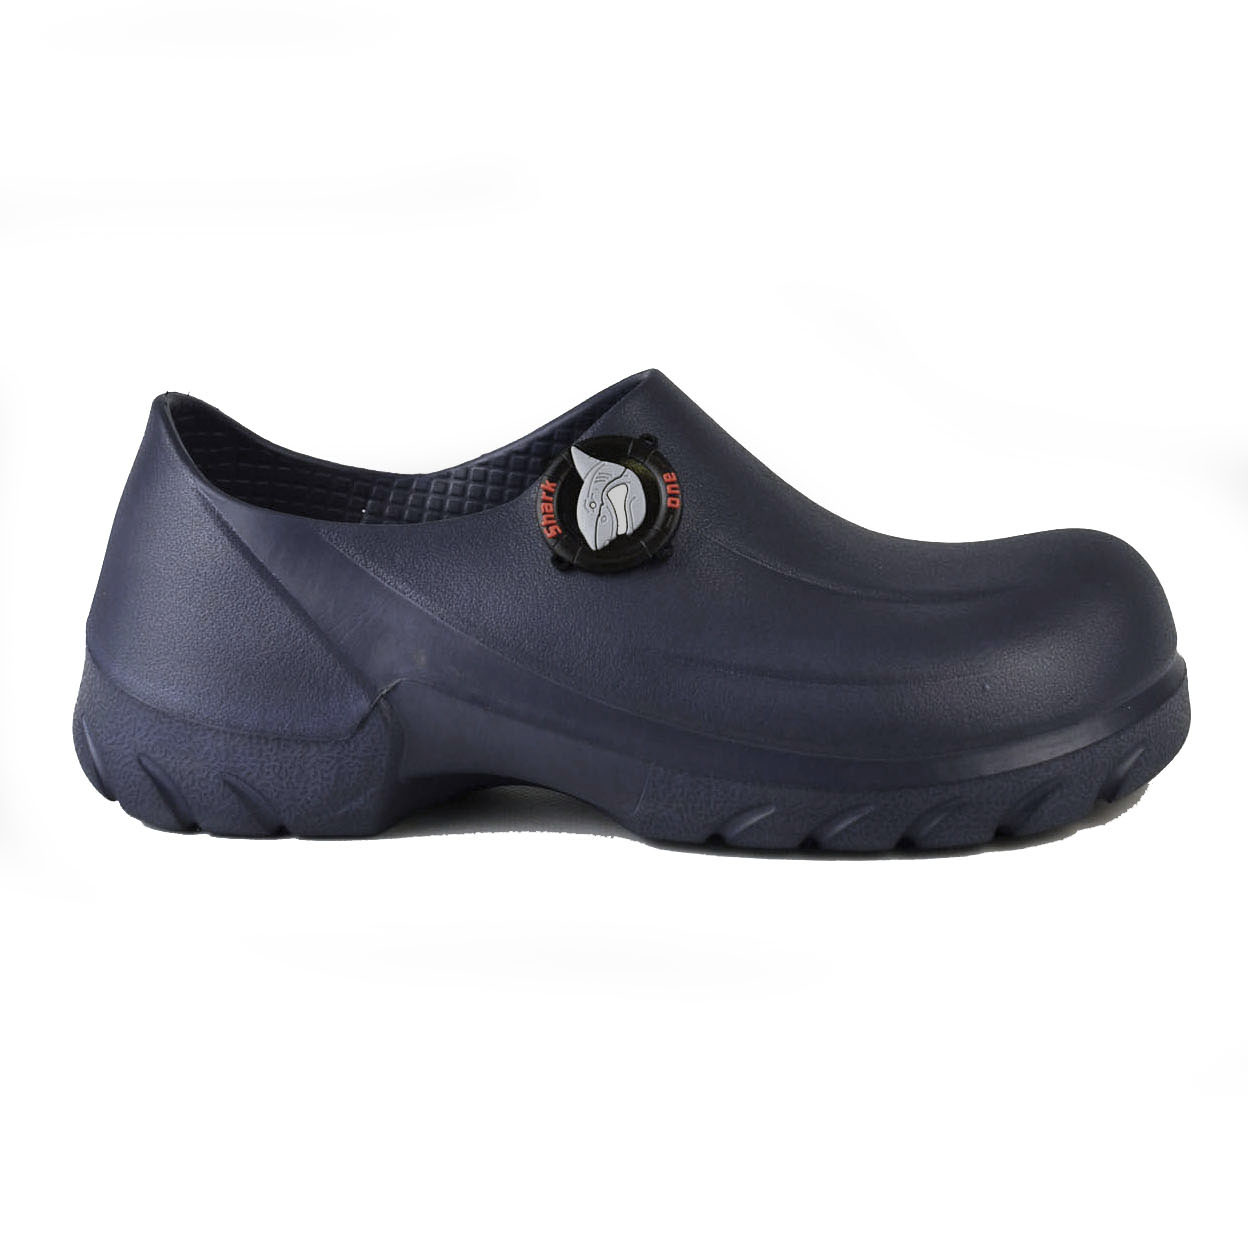 Men's low shoes, model 119452, image 119452a_medium.jpg